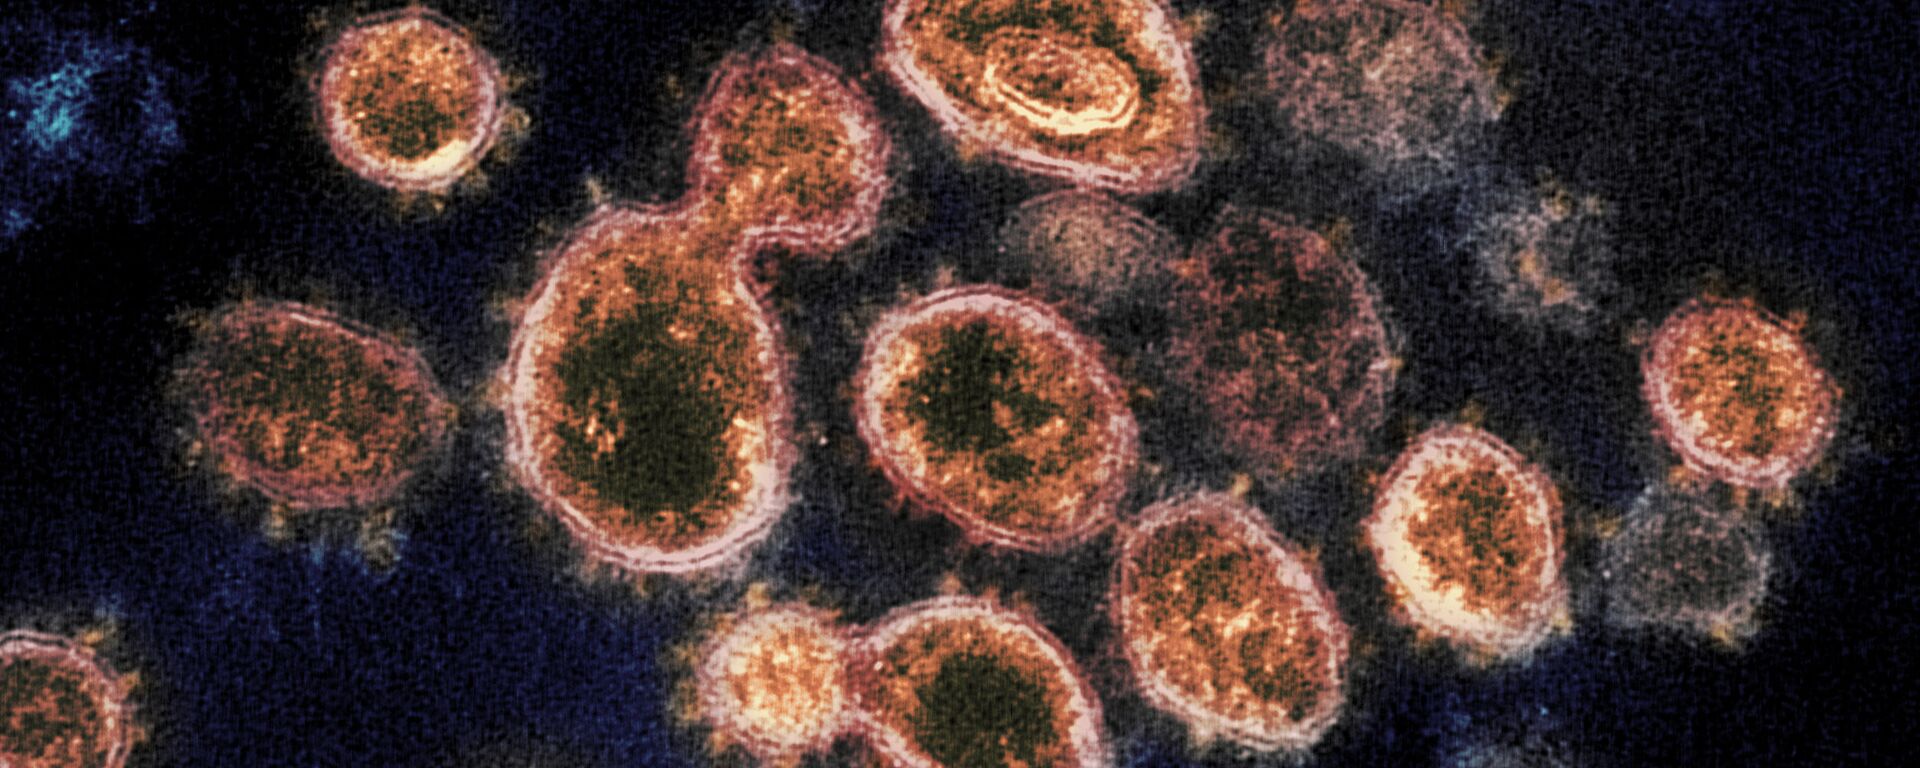  شناسایی ویروس جهش یافته کرونا انگلیس در ترکیه - اسپوتنیک افغانستان  , 1920, 01.01.2021